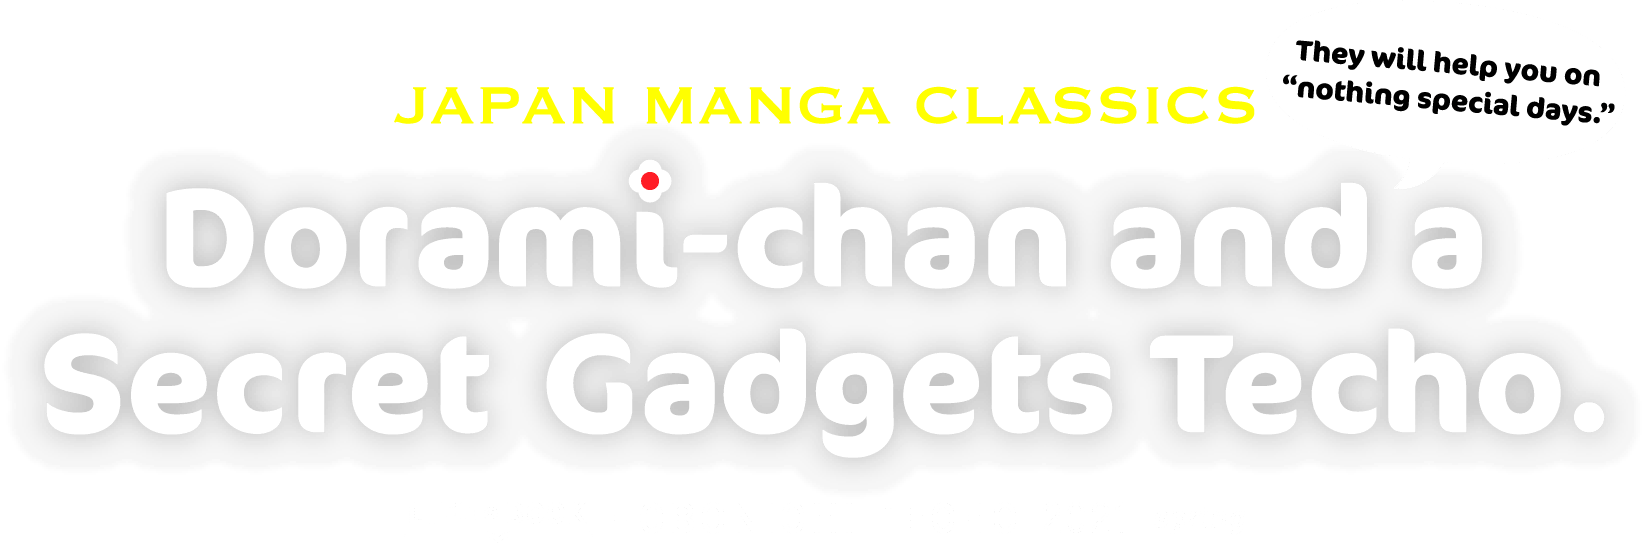 JAPAN MANGA CLASSICS Dorami-chan and a Secret Gadgets Techo.